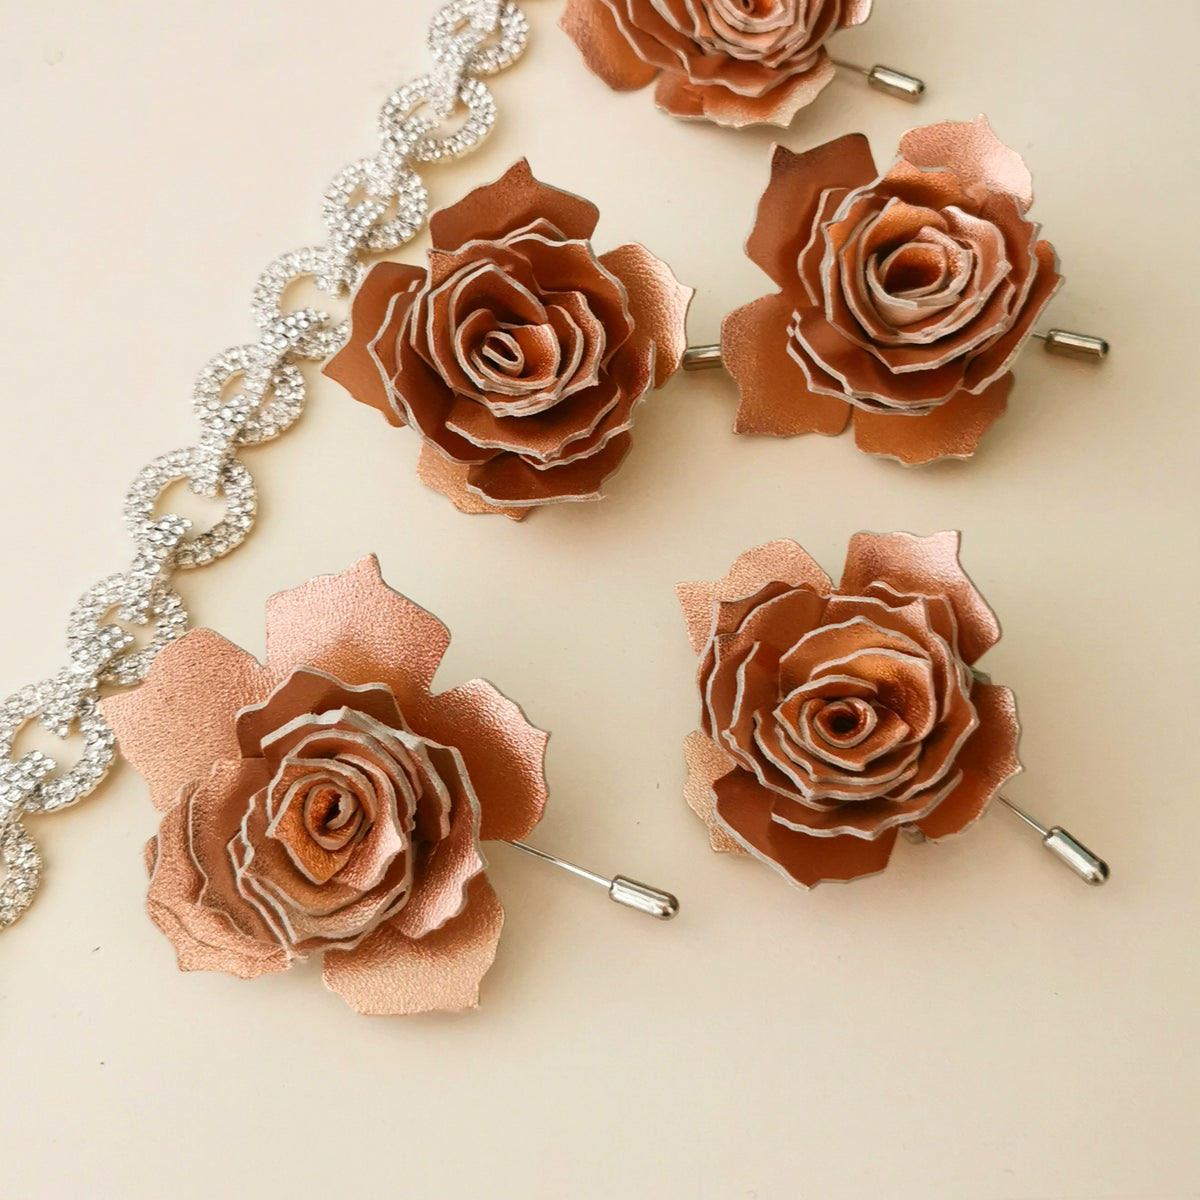 rose flower lapel pin, mens wedding boutonniere, rose gold wedding boutonniere, groomsmen gift set, lapel rose flower, prom